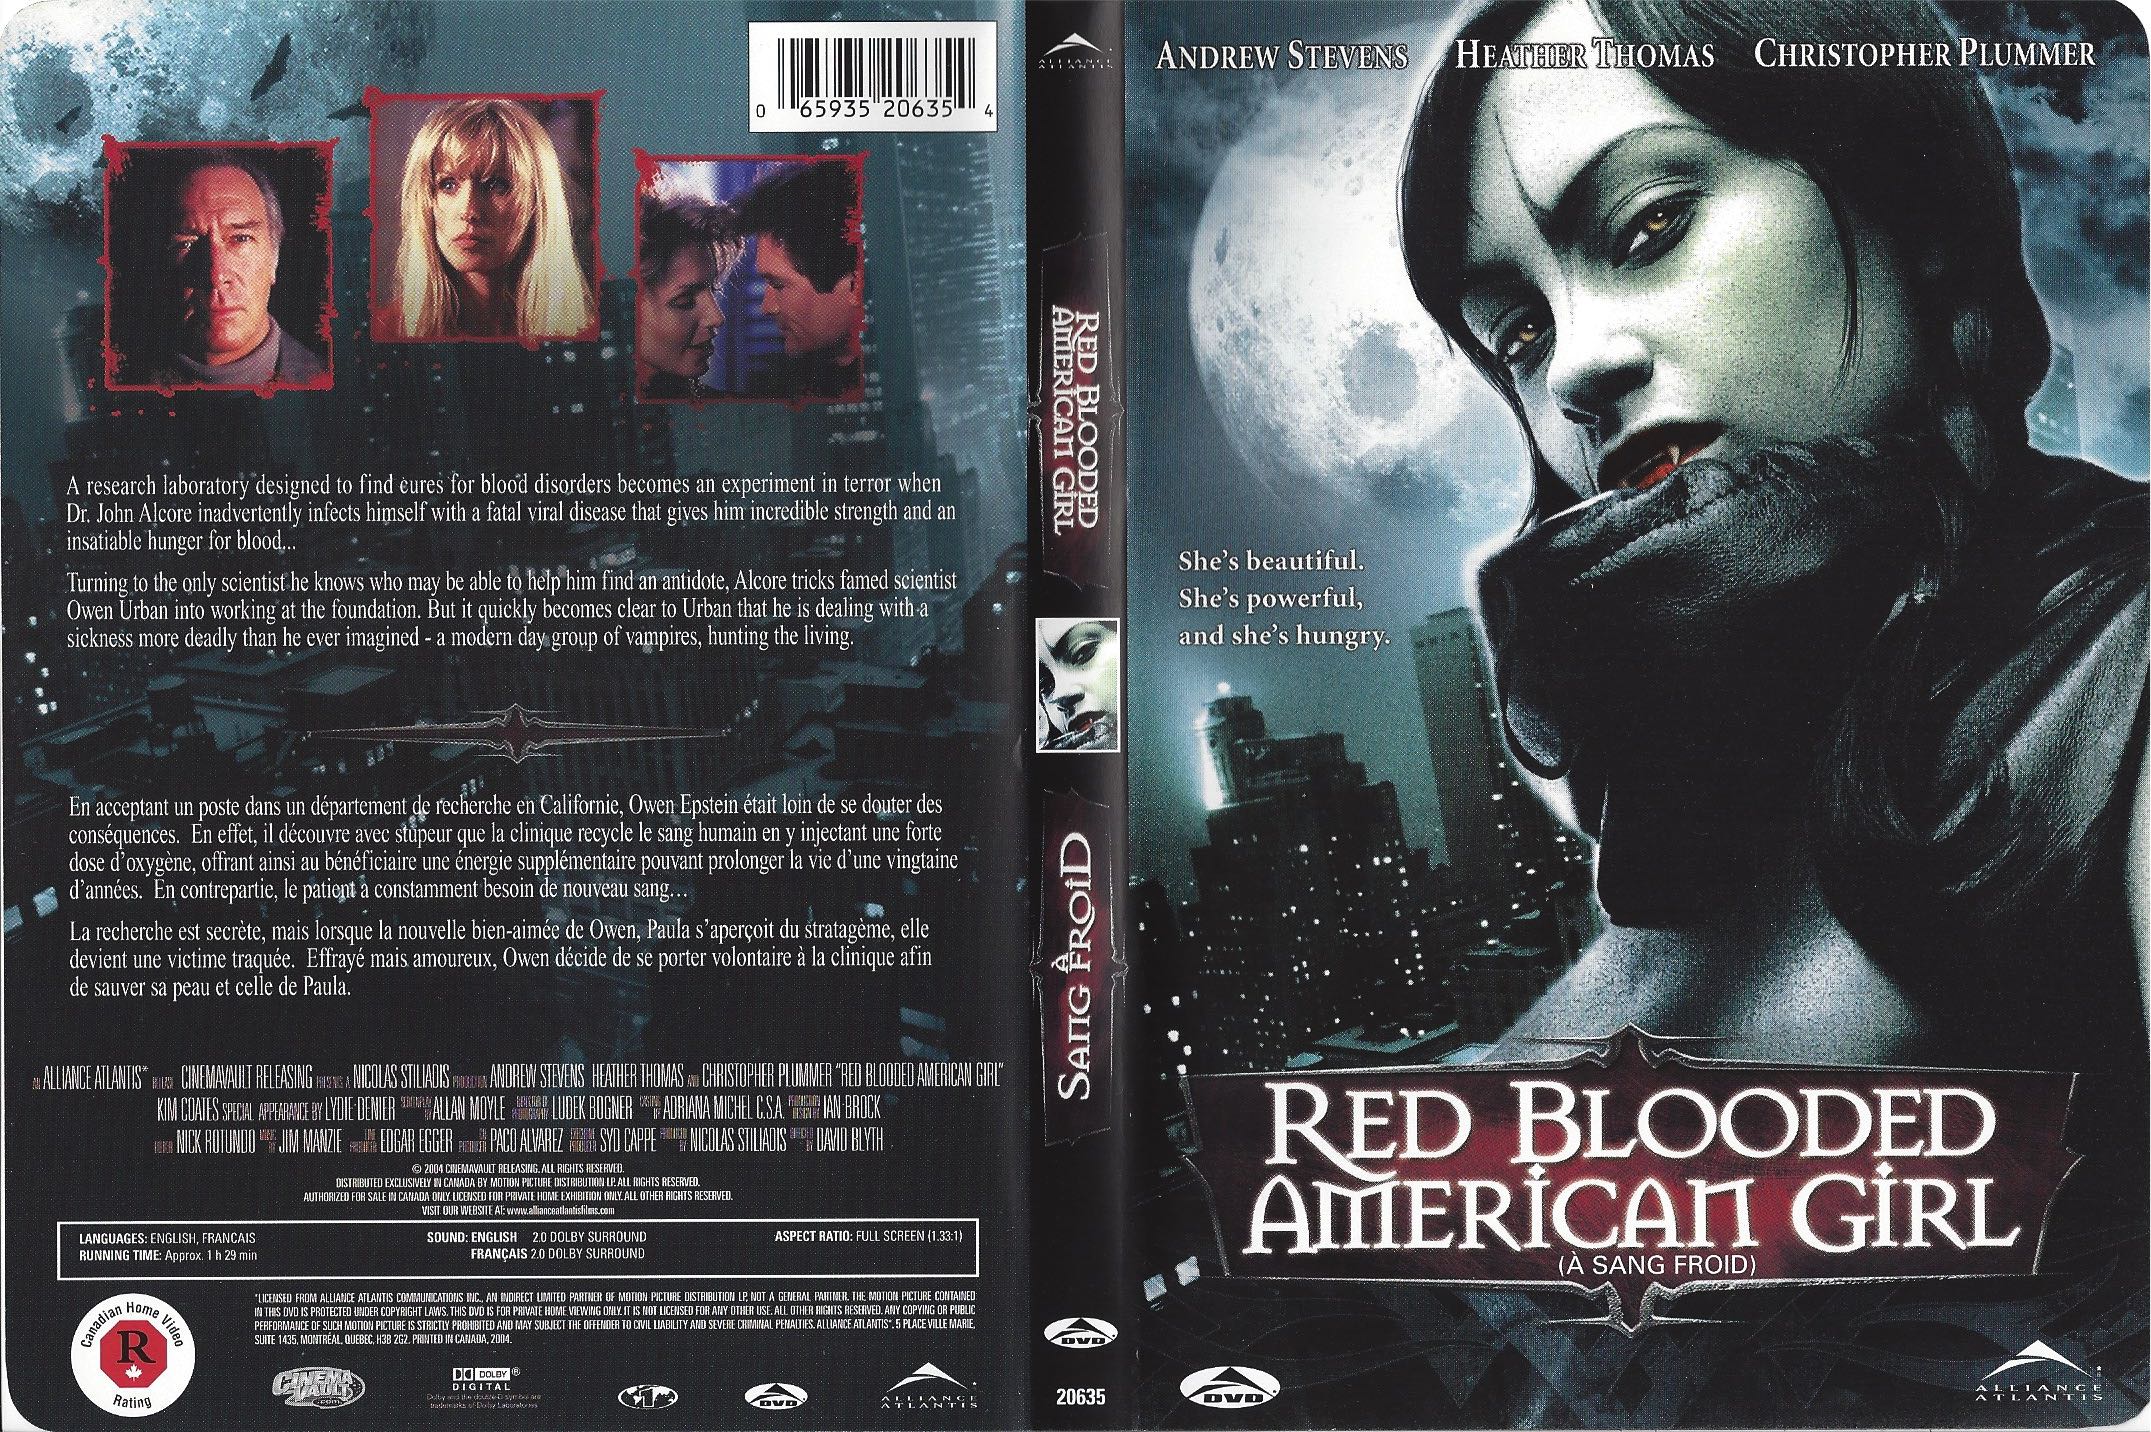 Red Blooded American Girl (1990) Screenshot 3 